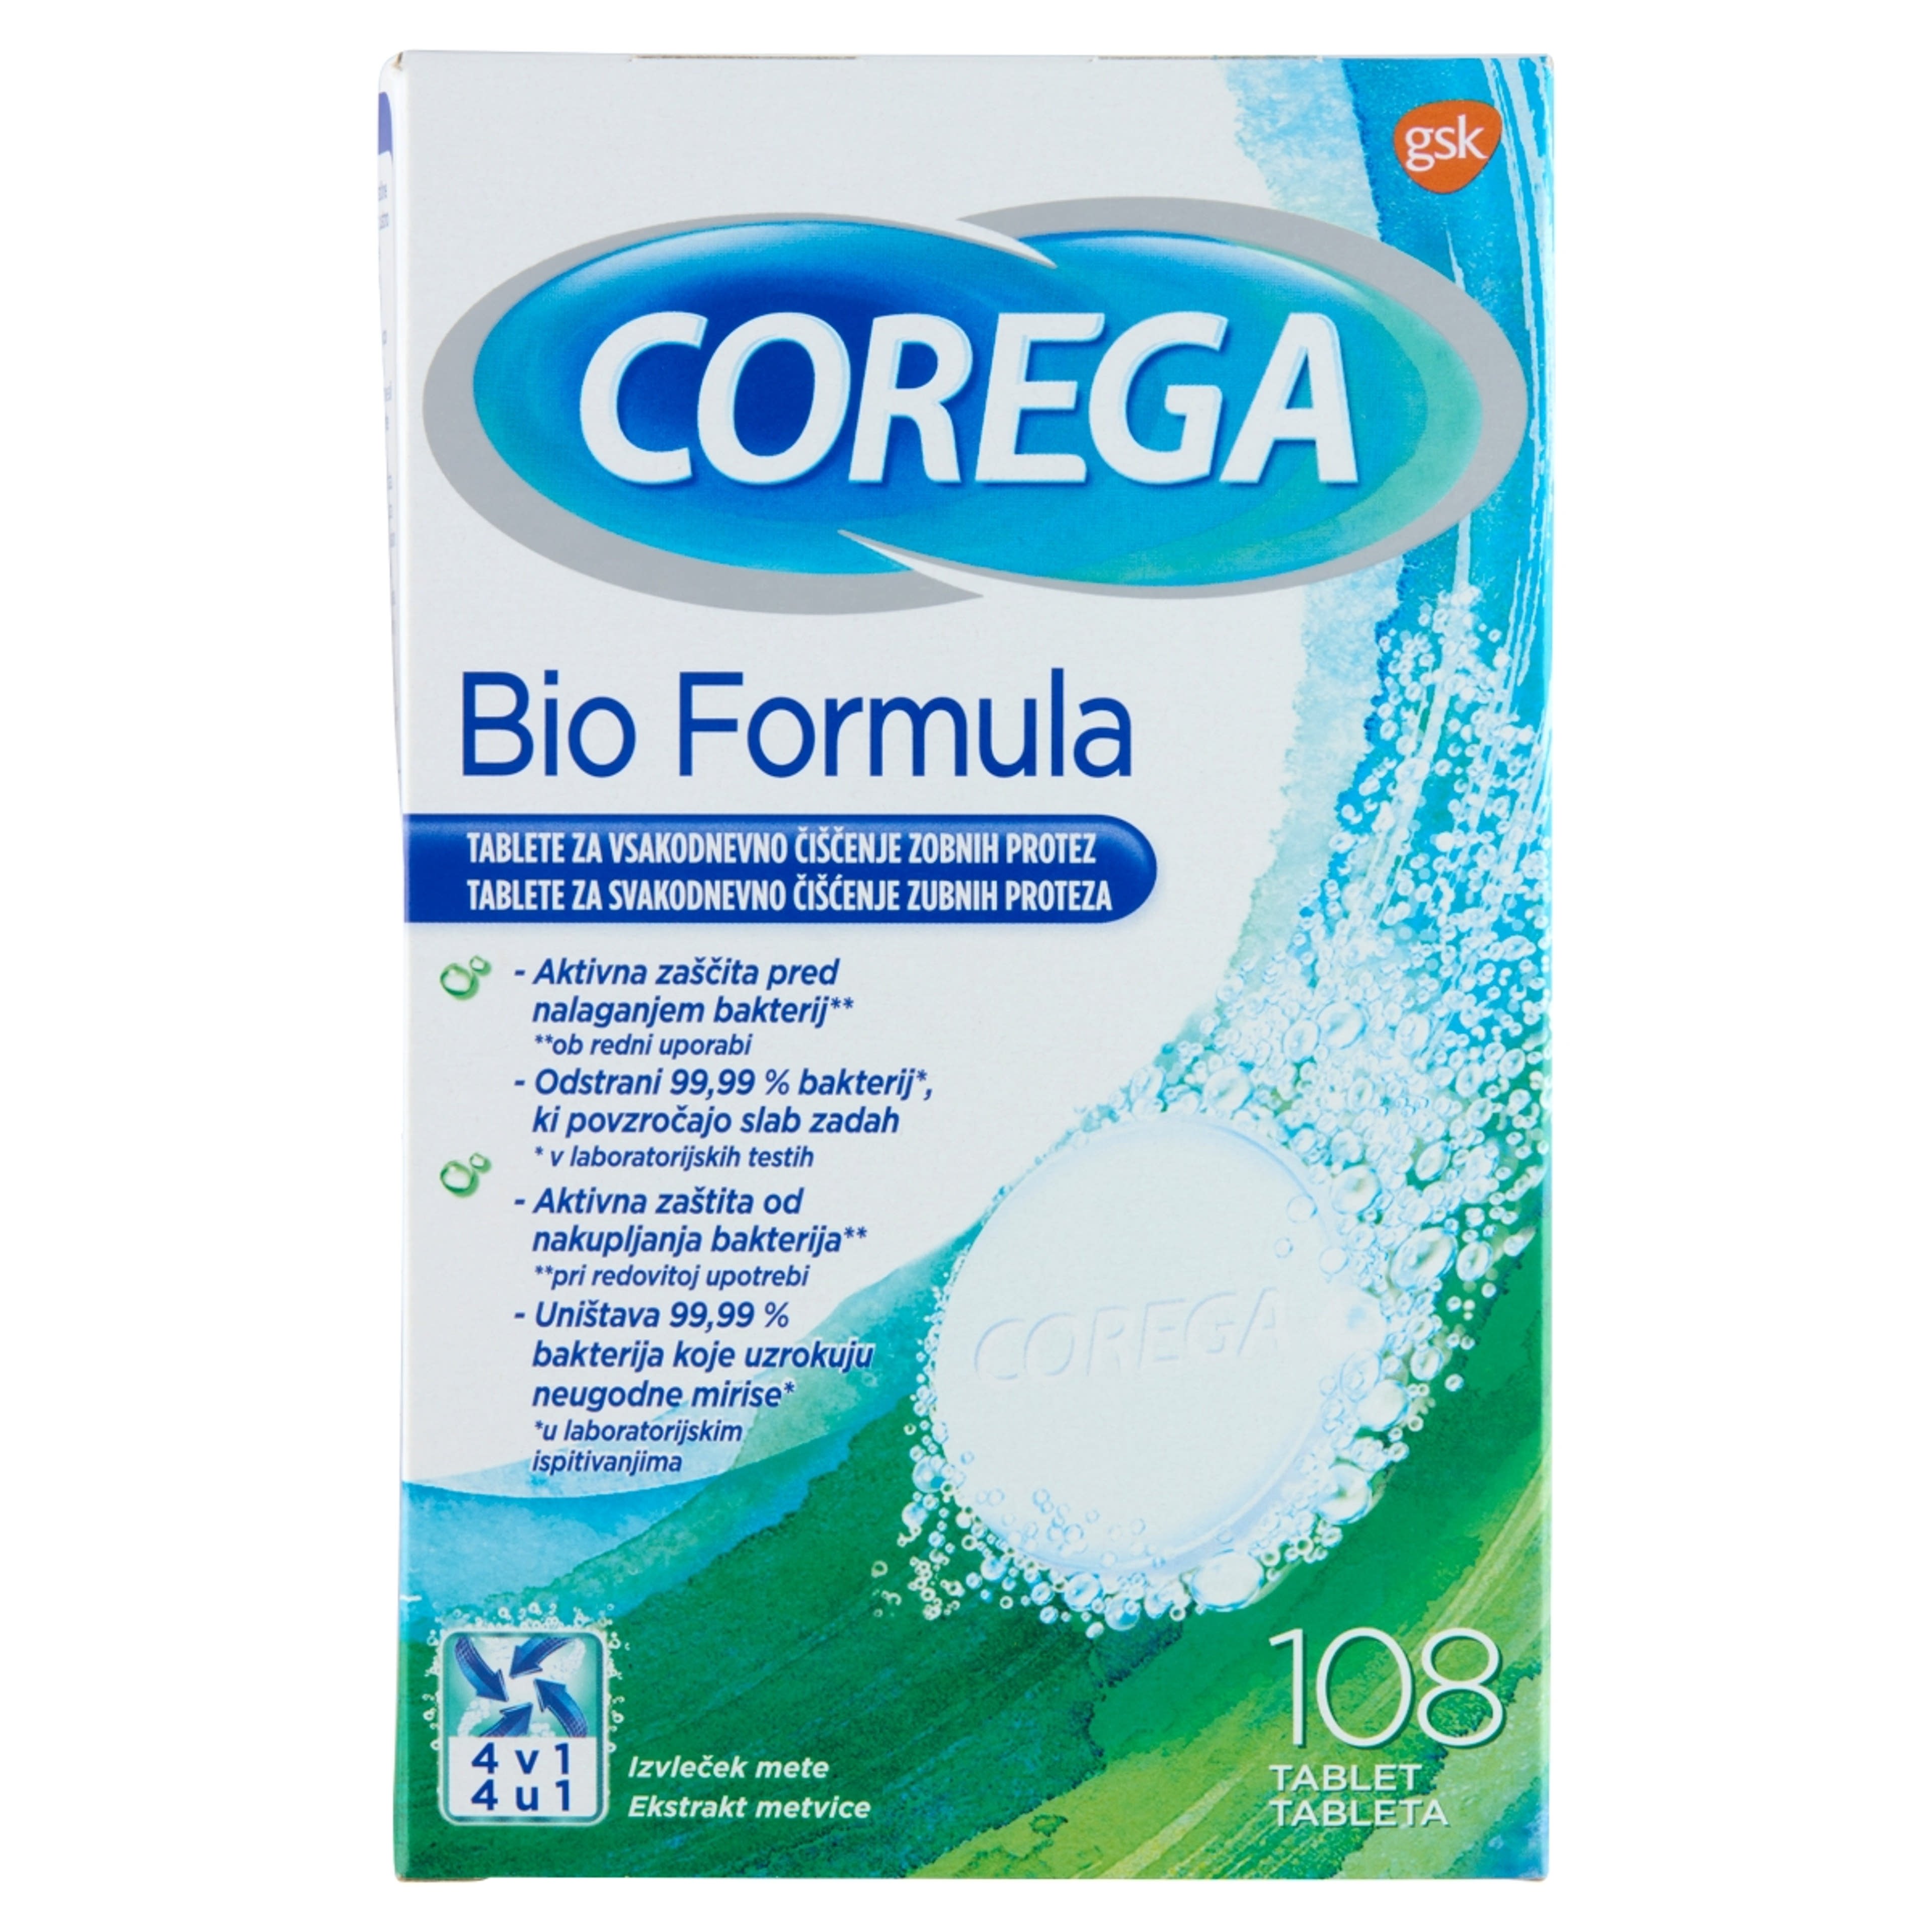 Corega Bio Formula mufogsortisztító tabletta - 96 db-1